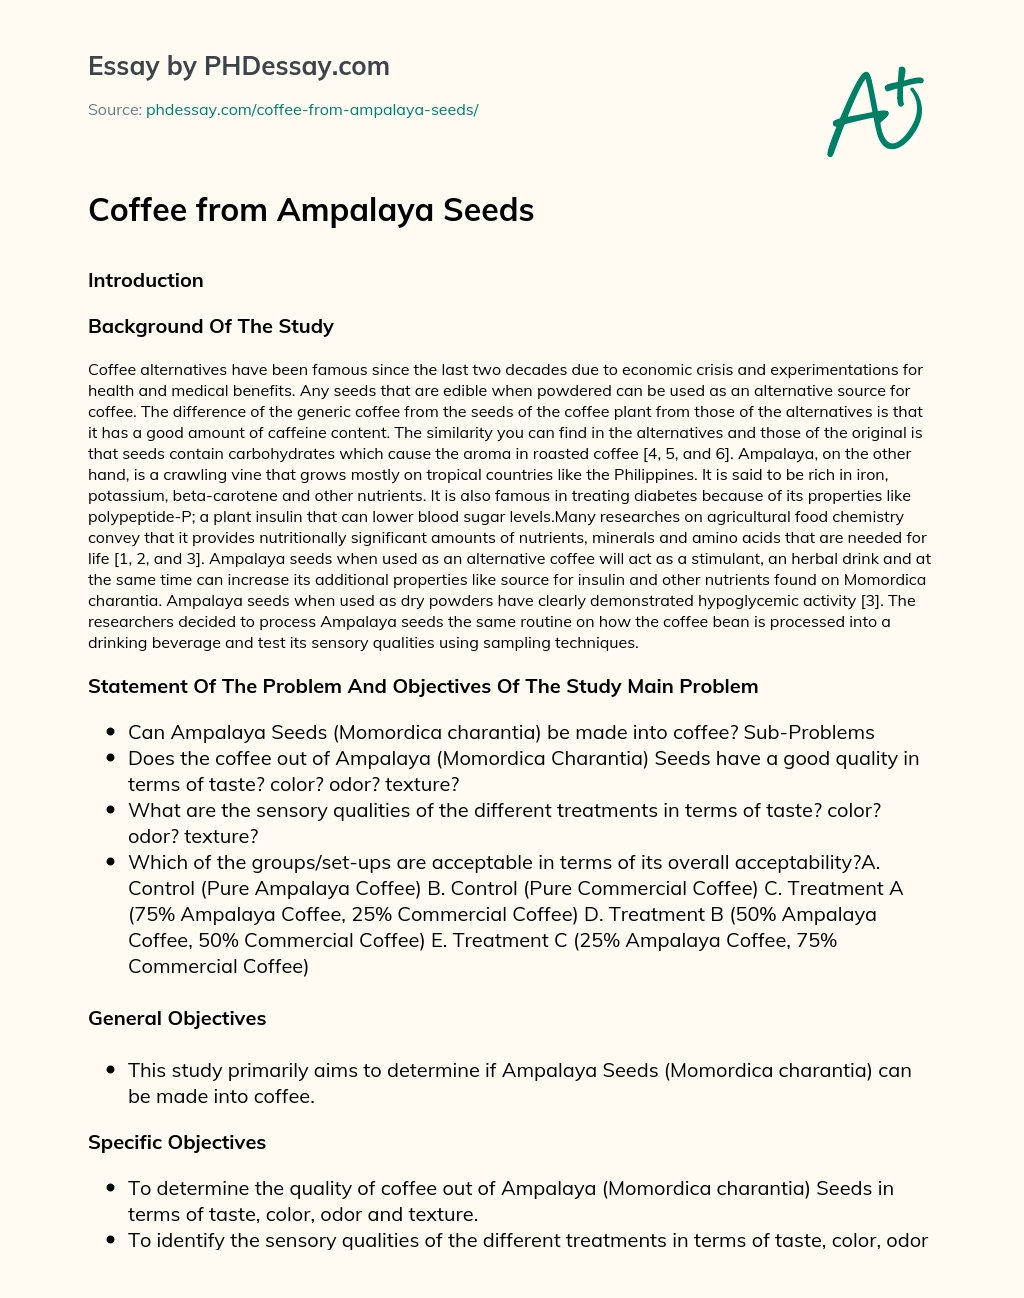 Coffee from Ampalaya Seeds essay